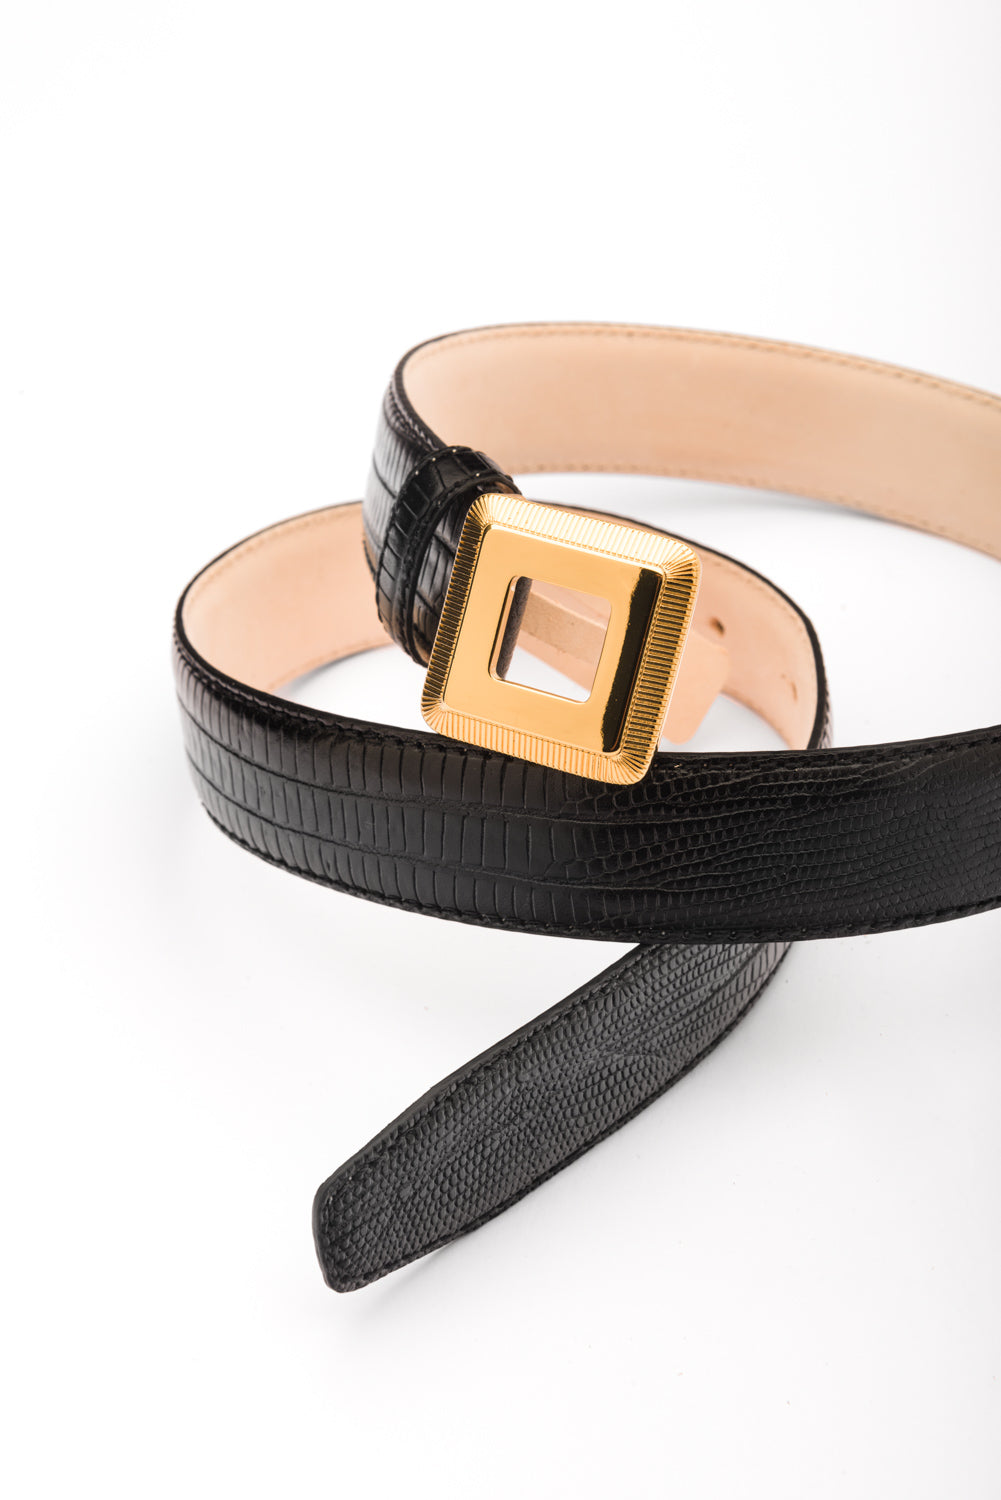 Adriana gold buckle black lizard print leather belt